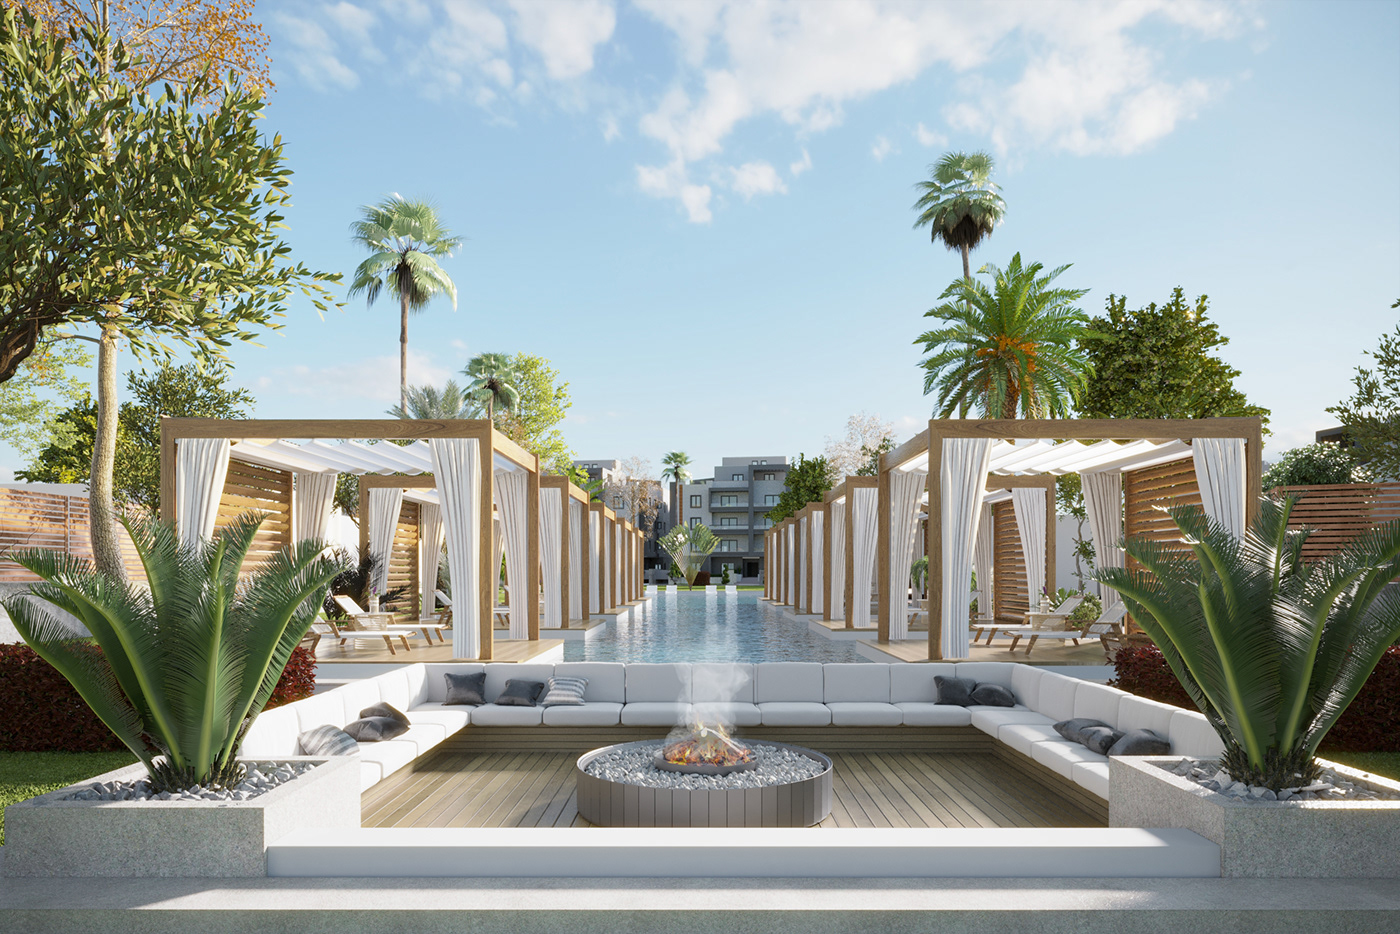 visualization architecture exterior Landscape residential Pool archviz architecture design